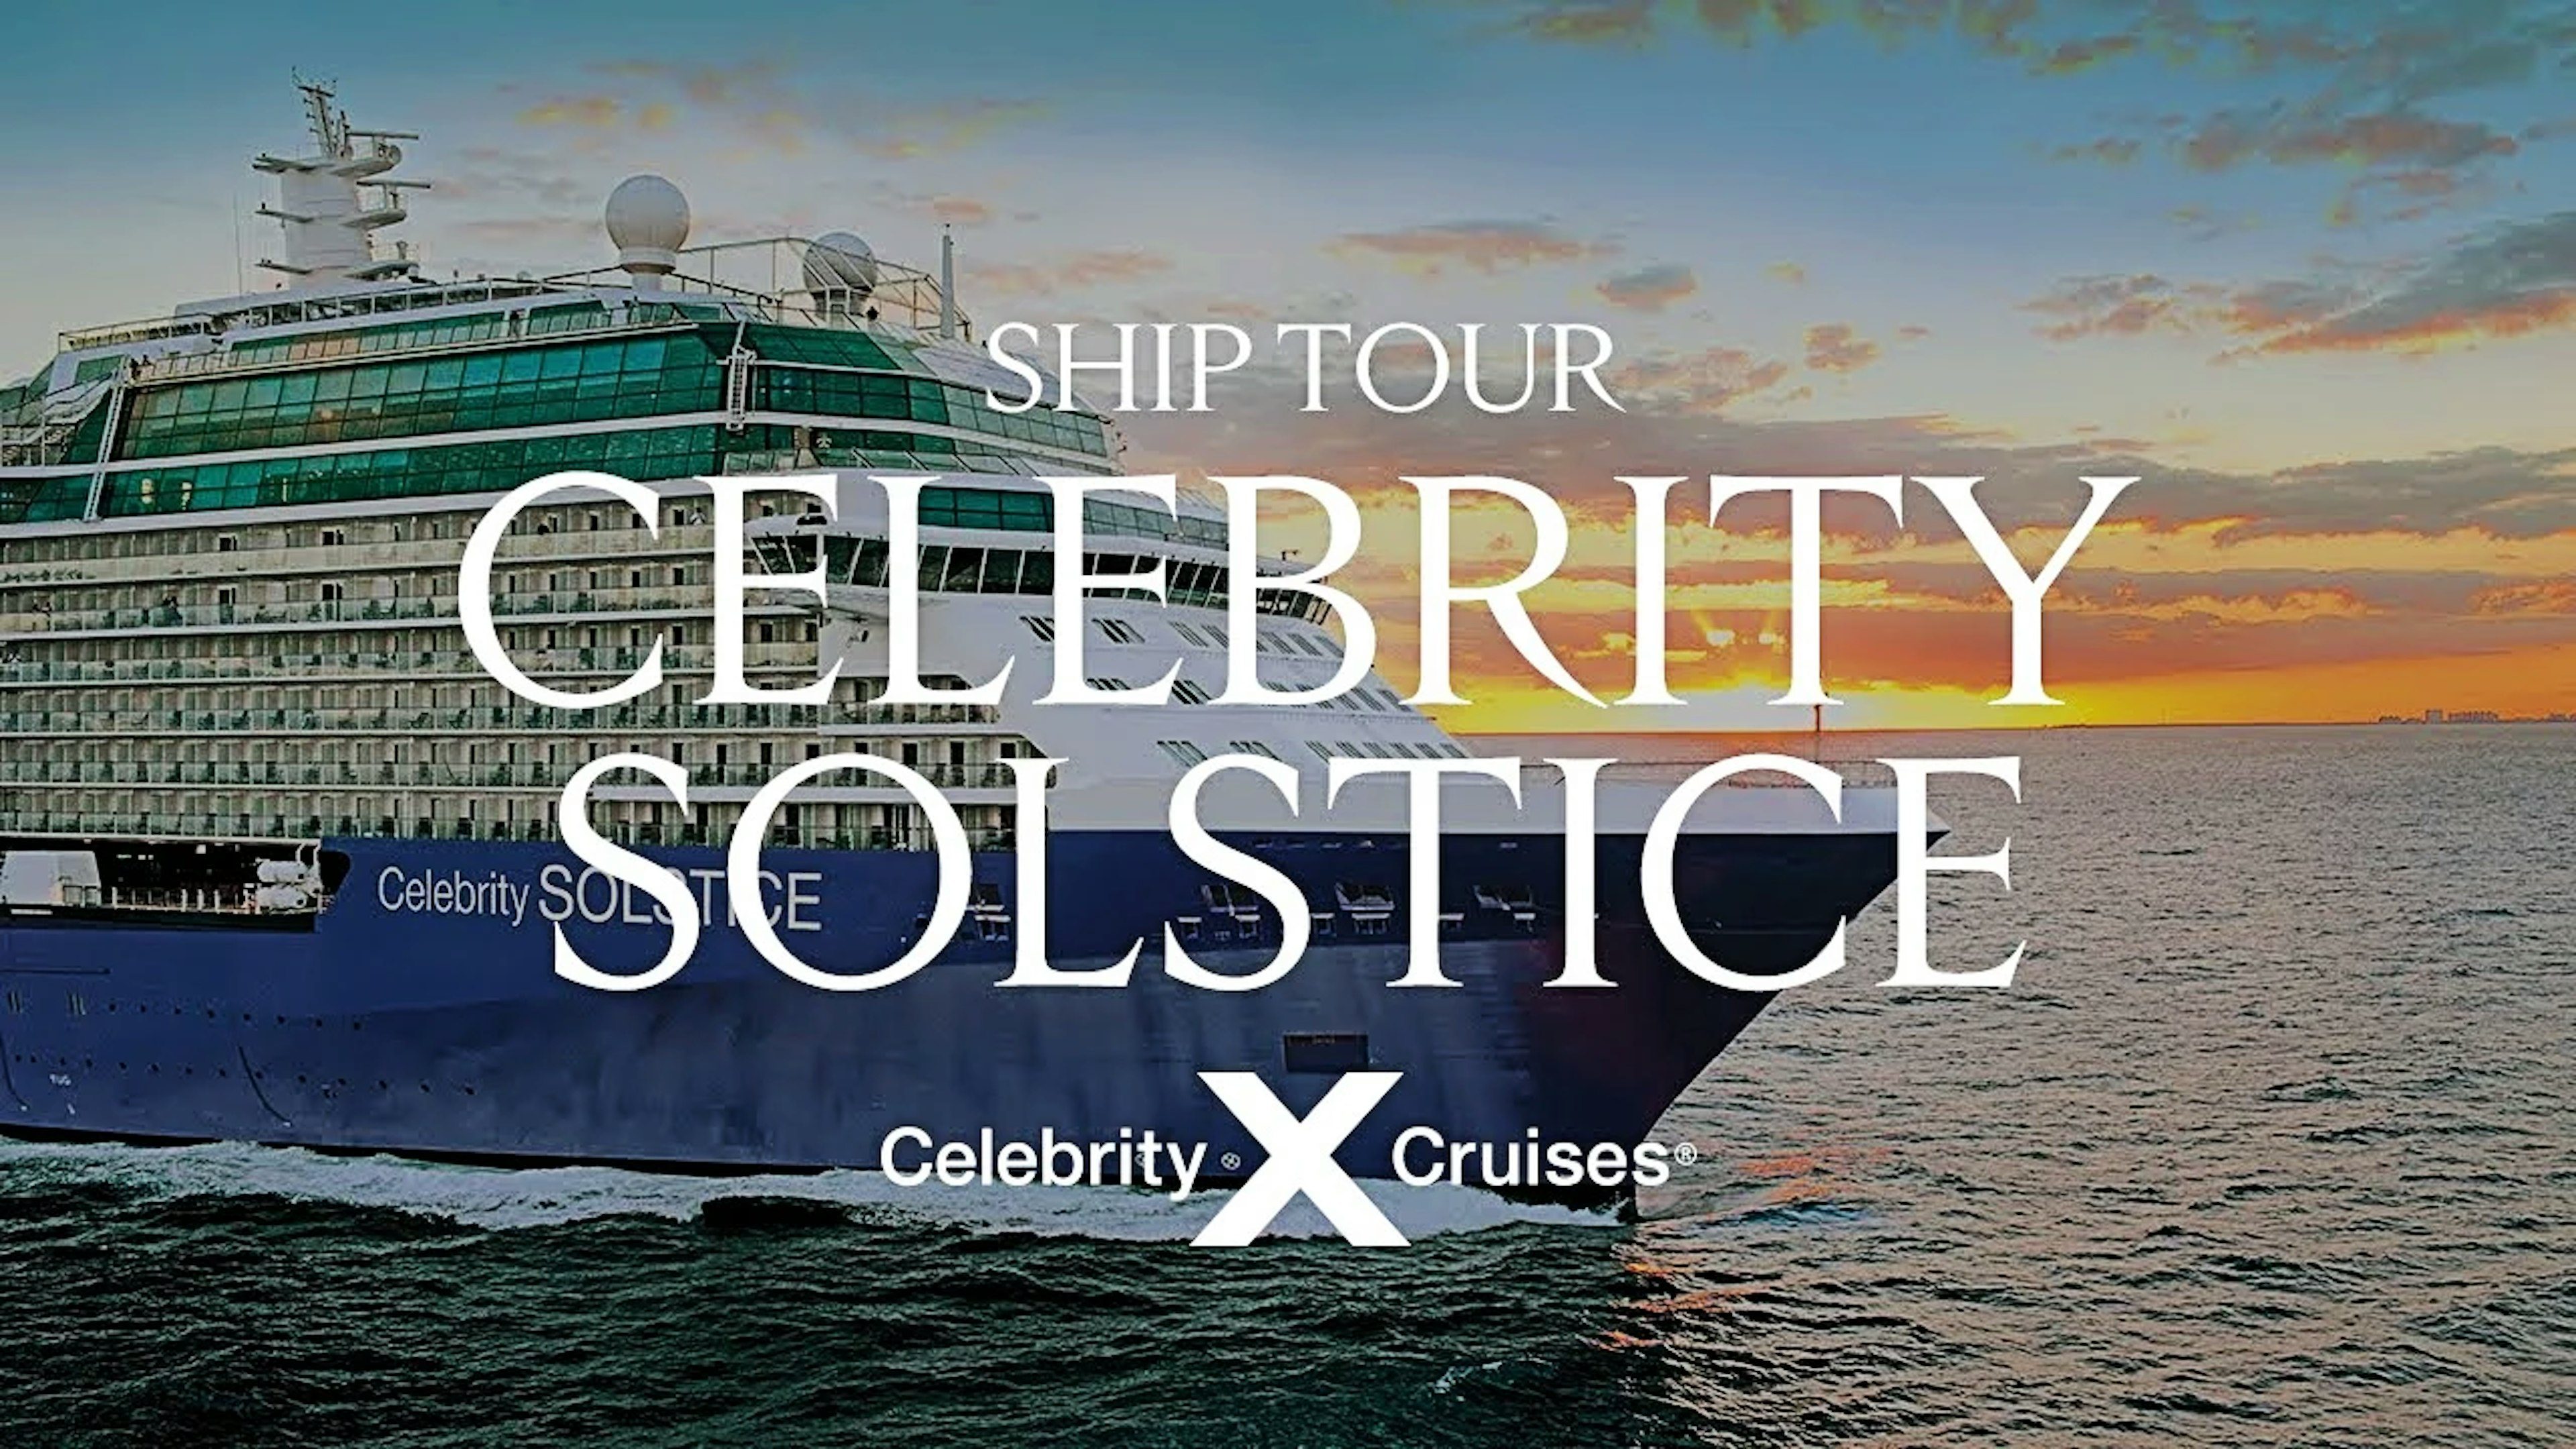 celebrity solstice cruise director